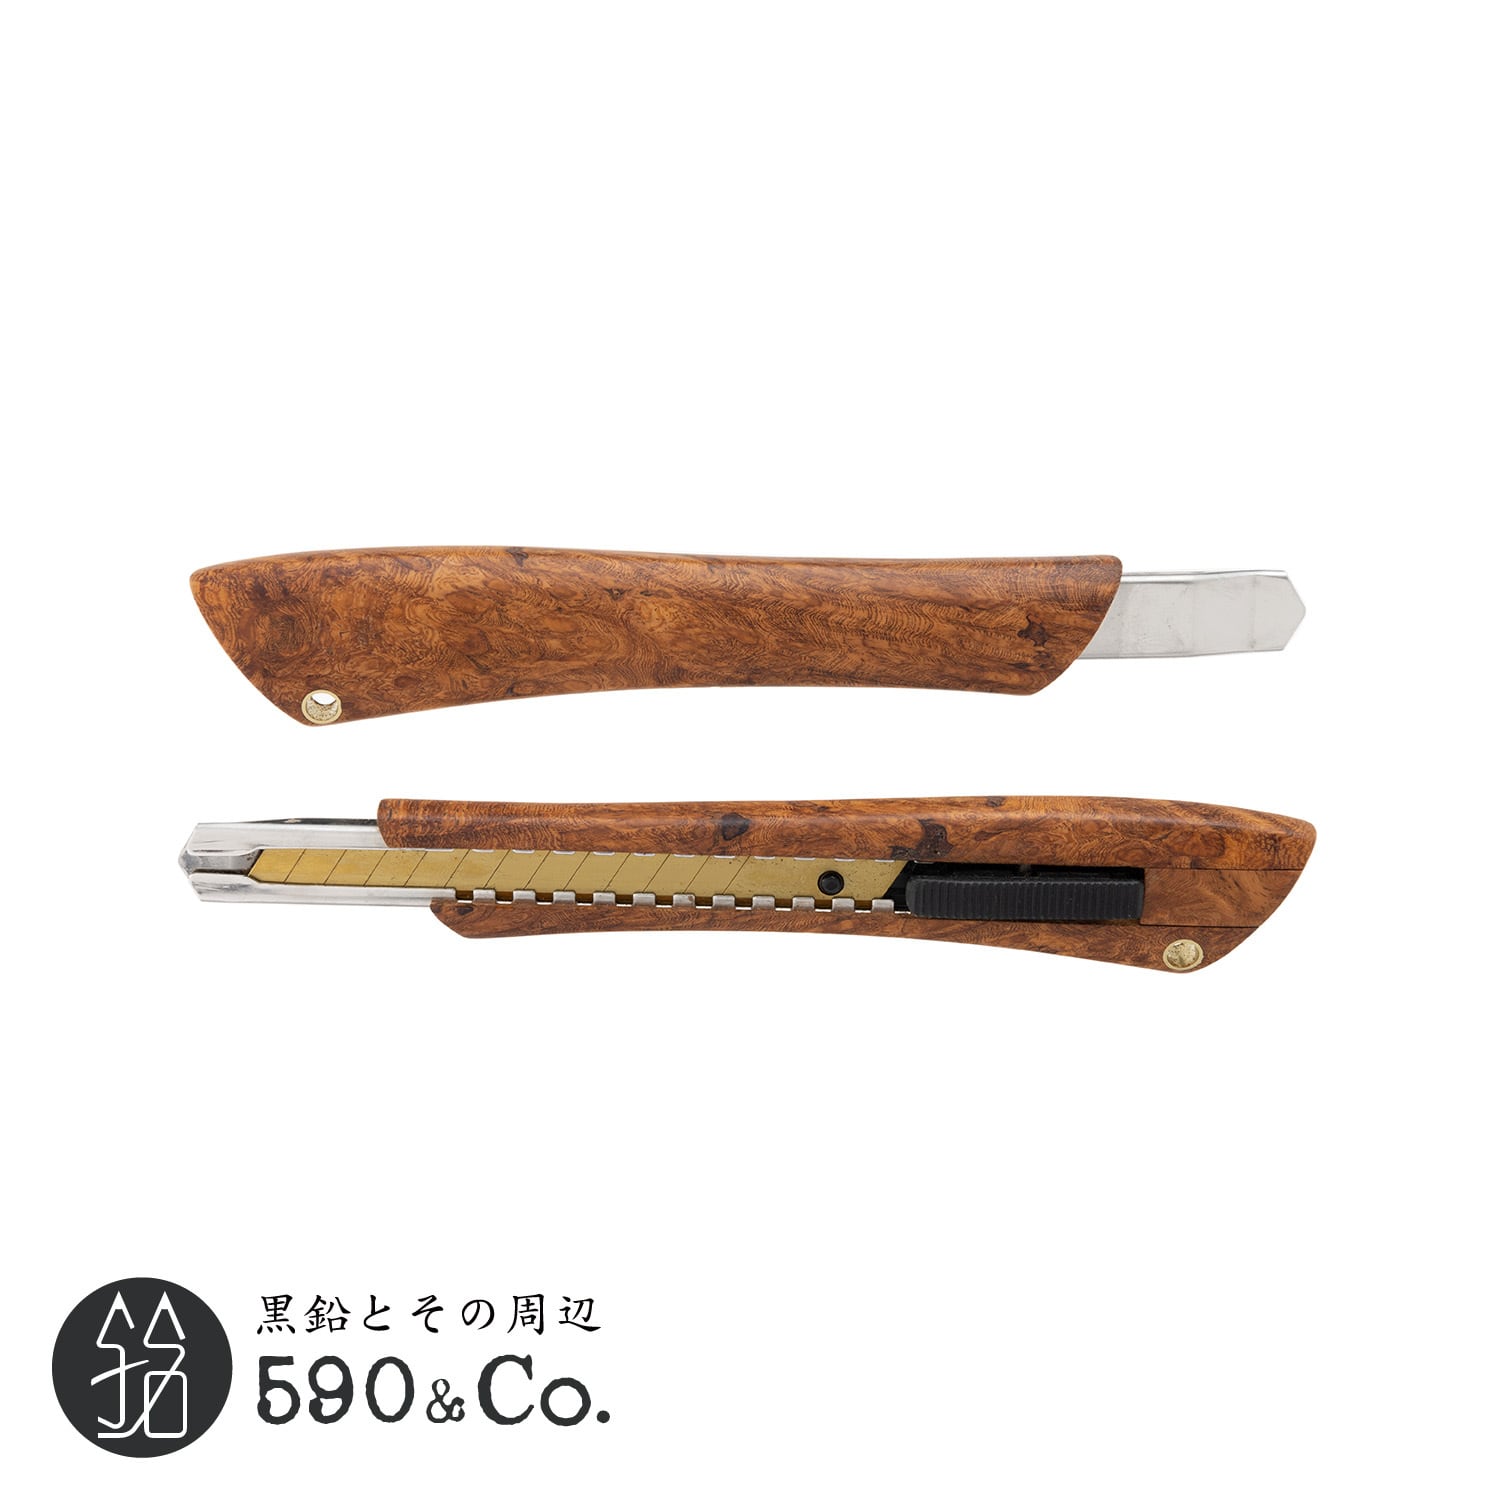 【Flamberg/フランベルク】木製カッターナイフS型 (花梨瘤杢) D 590Co.